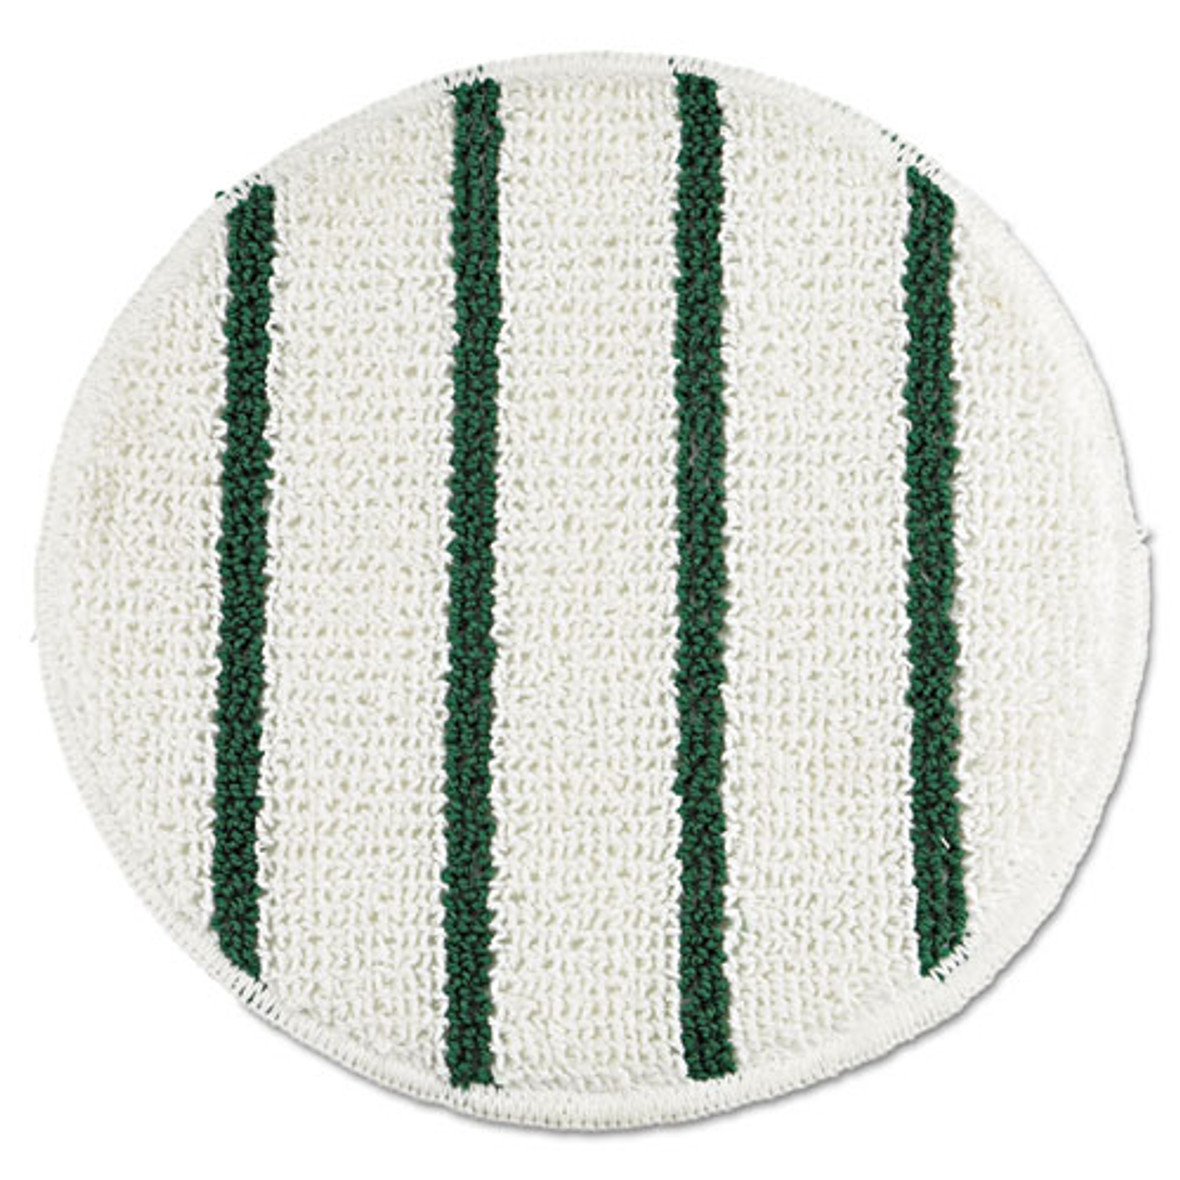 Rubbermaid Commercial Low Profile Scrub-Strip Carpet Bonnet, 19" Diameter, White/Green